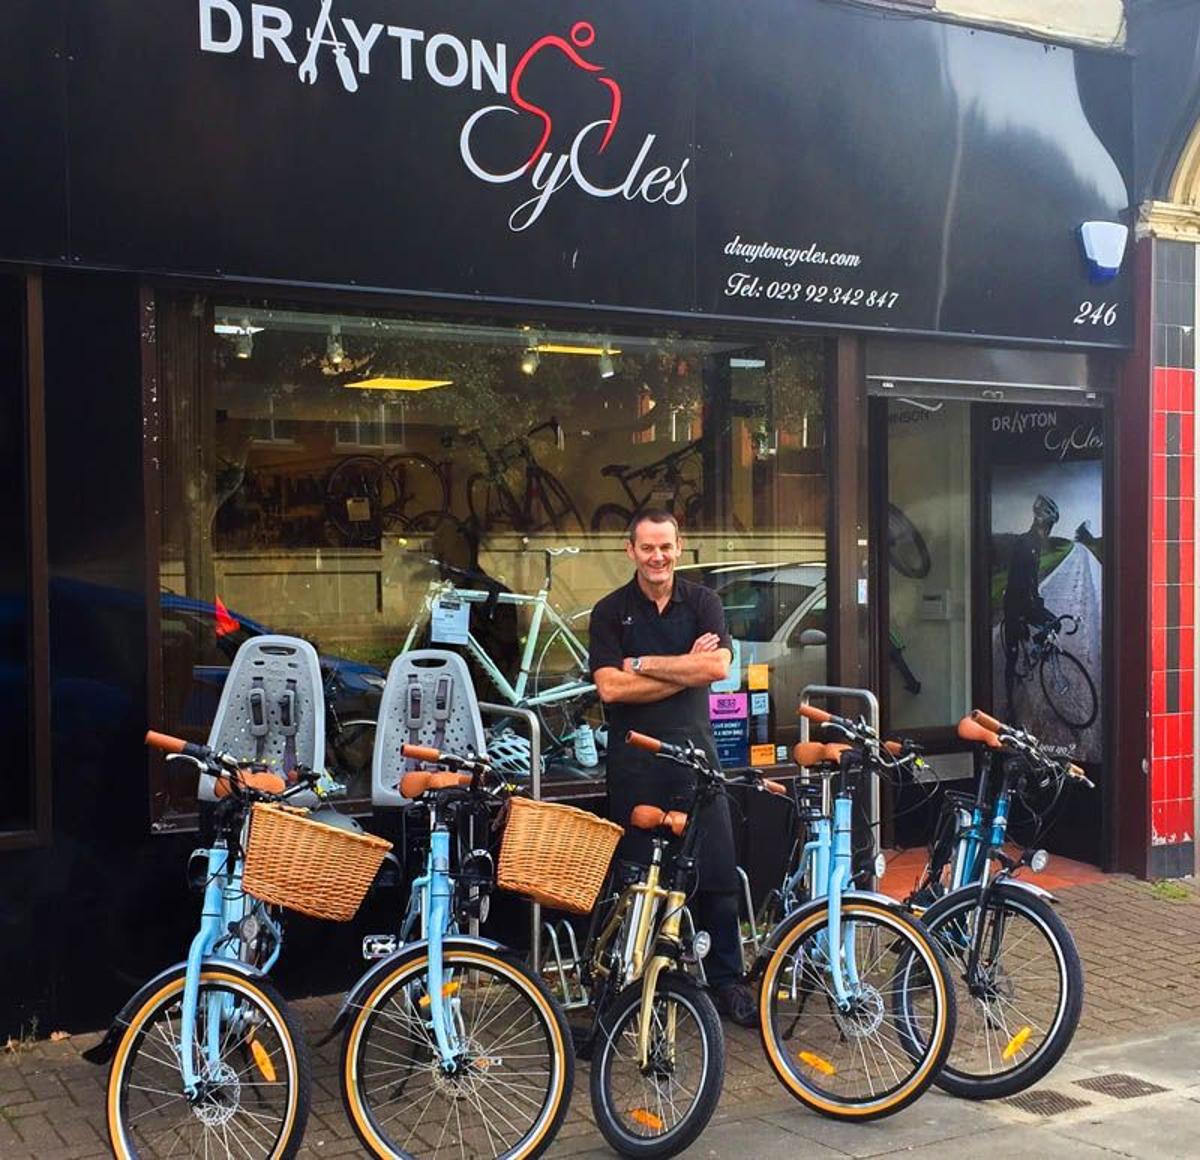 Image of Juicy Bike Dealer Drayton Cycles